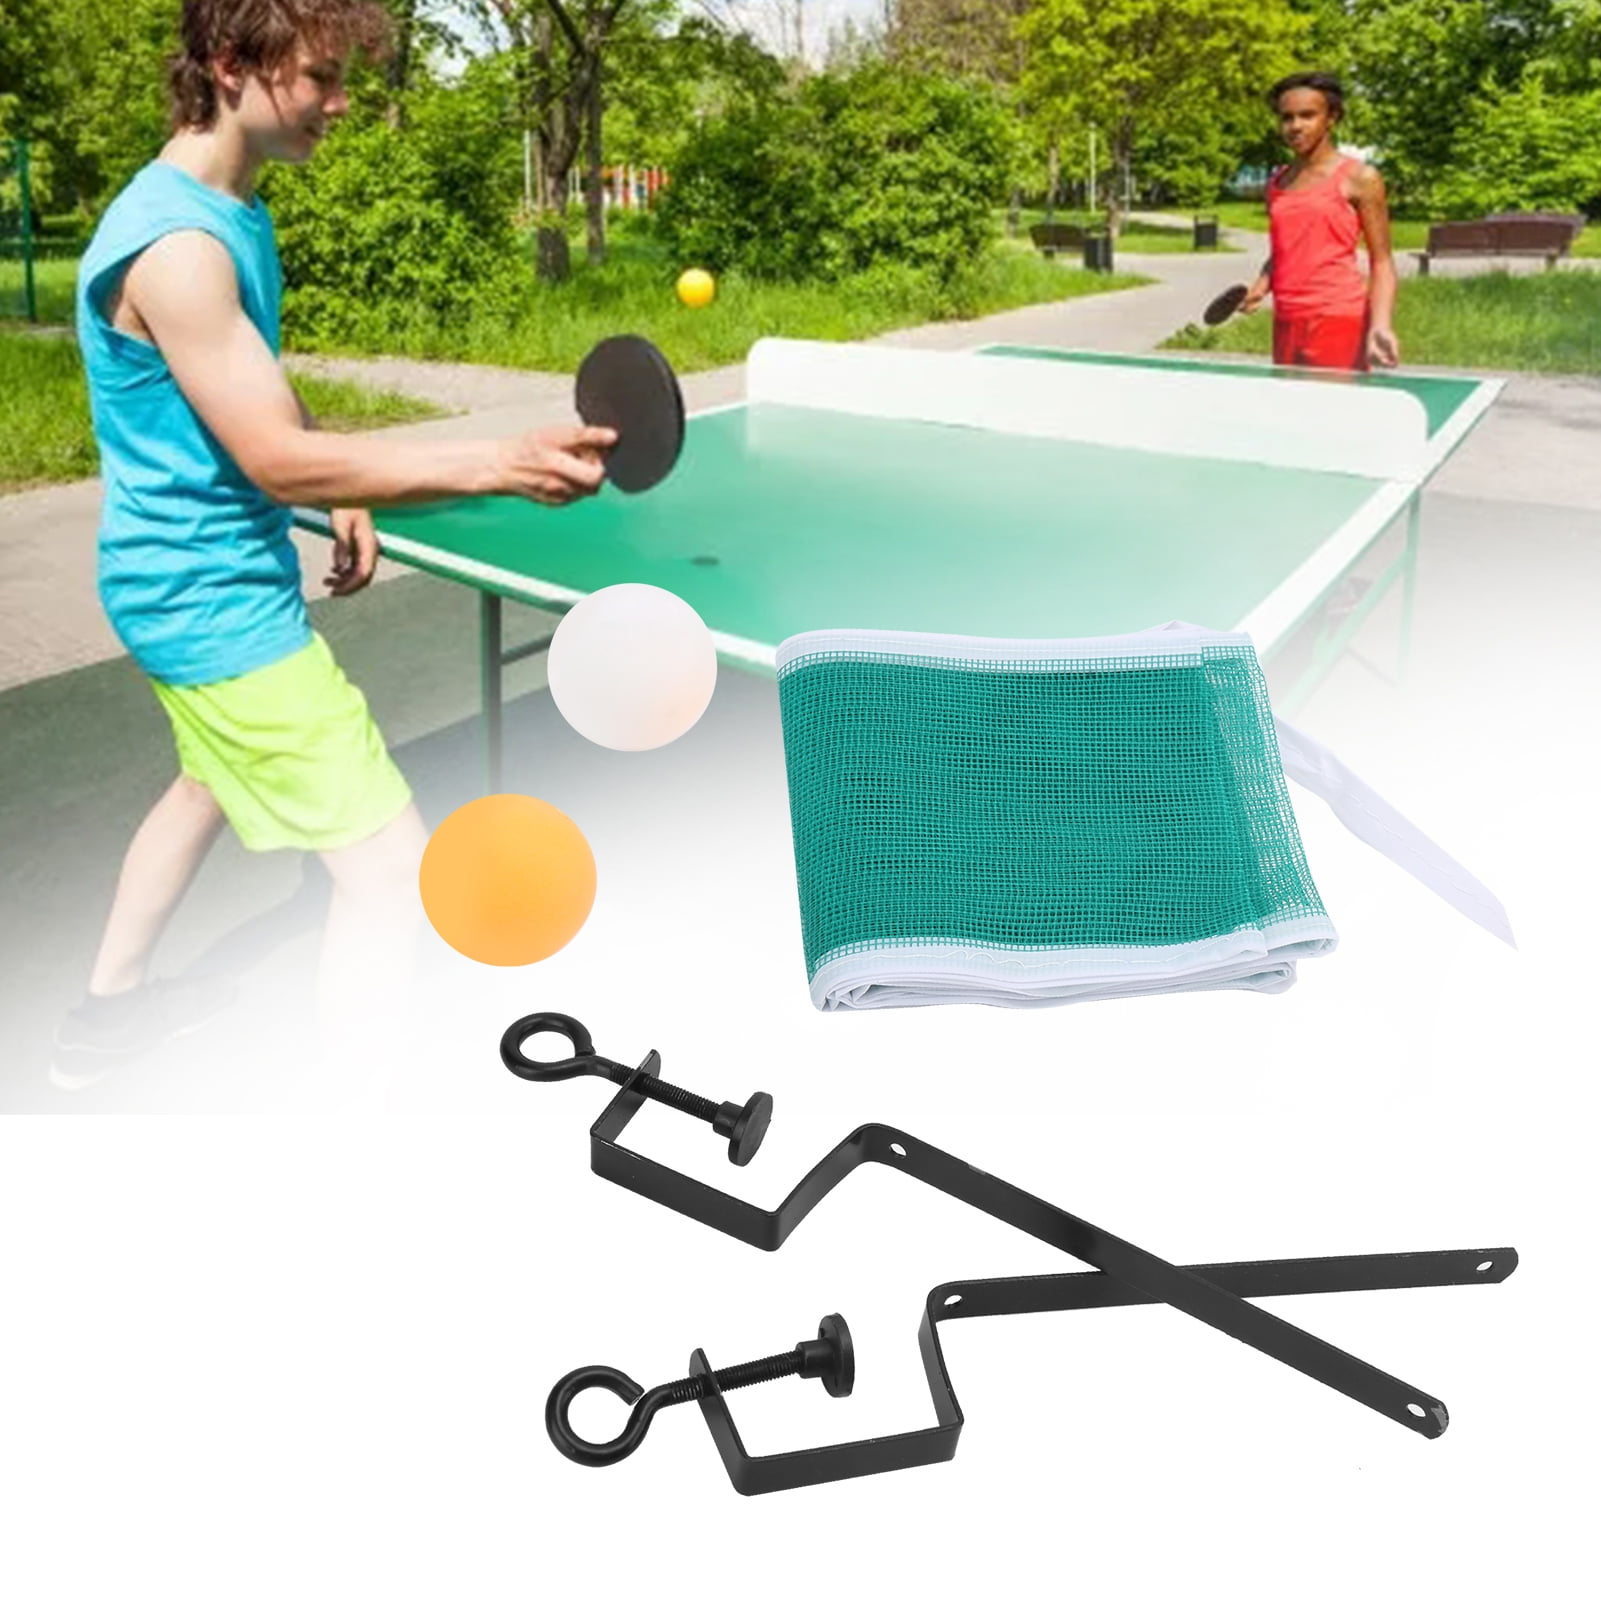 Details about   Regail Children Table Tennis Net And Post Set Portable Table Tennis Mesh Ball